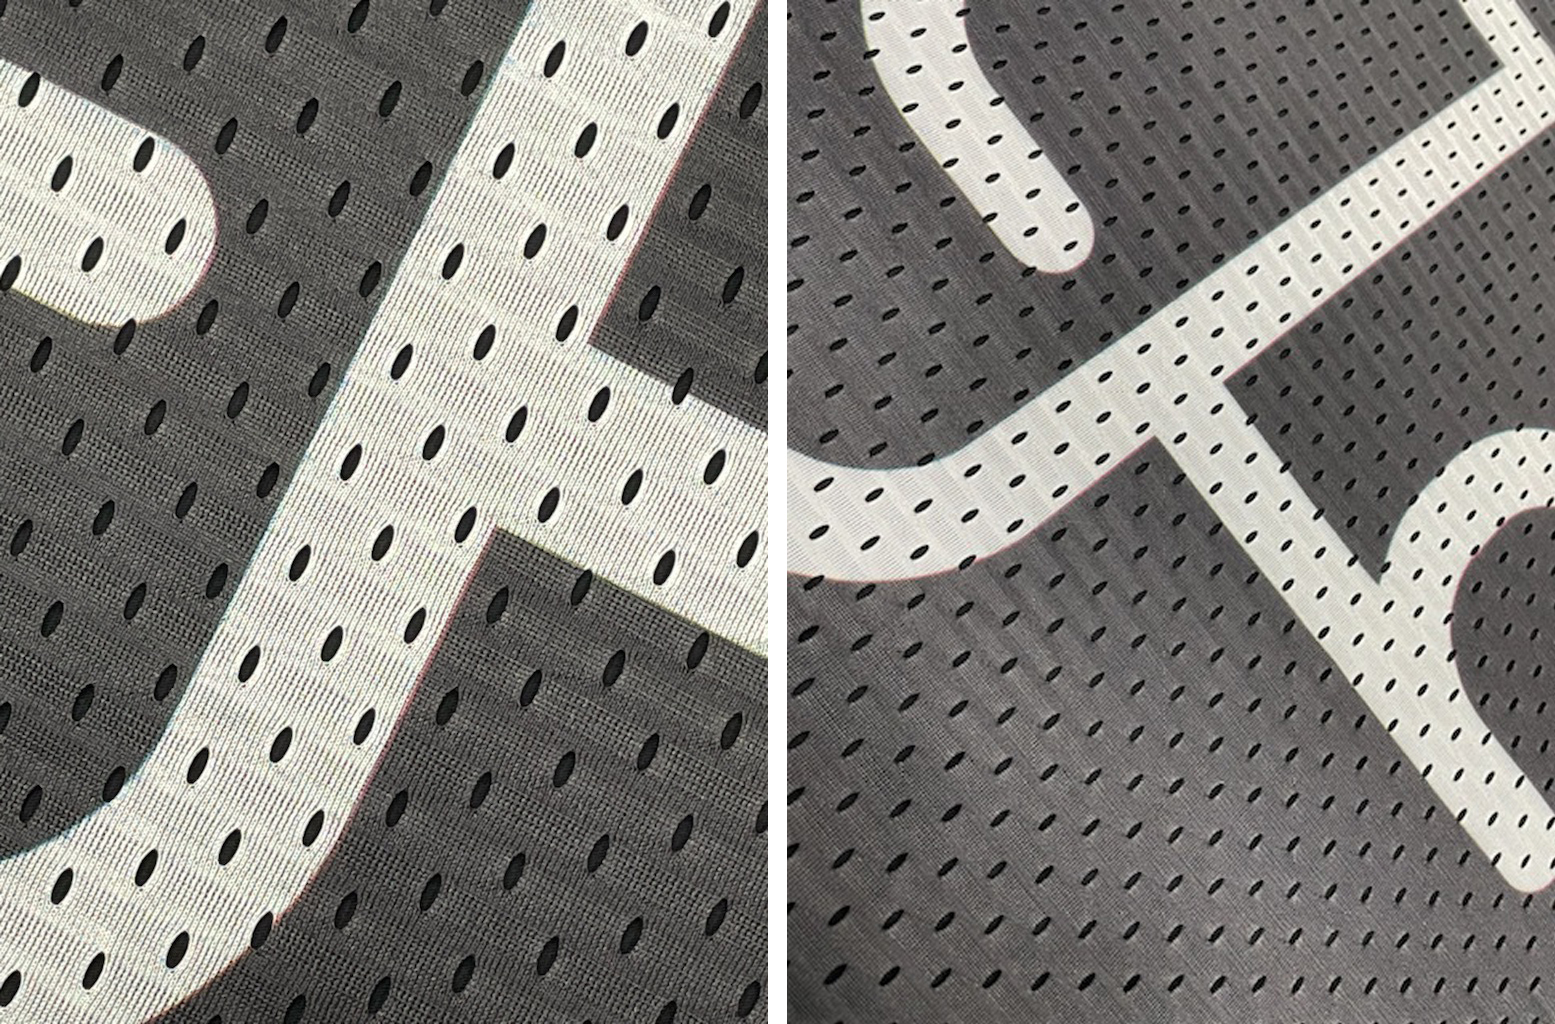 adprint and signage australia fabric mesh